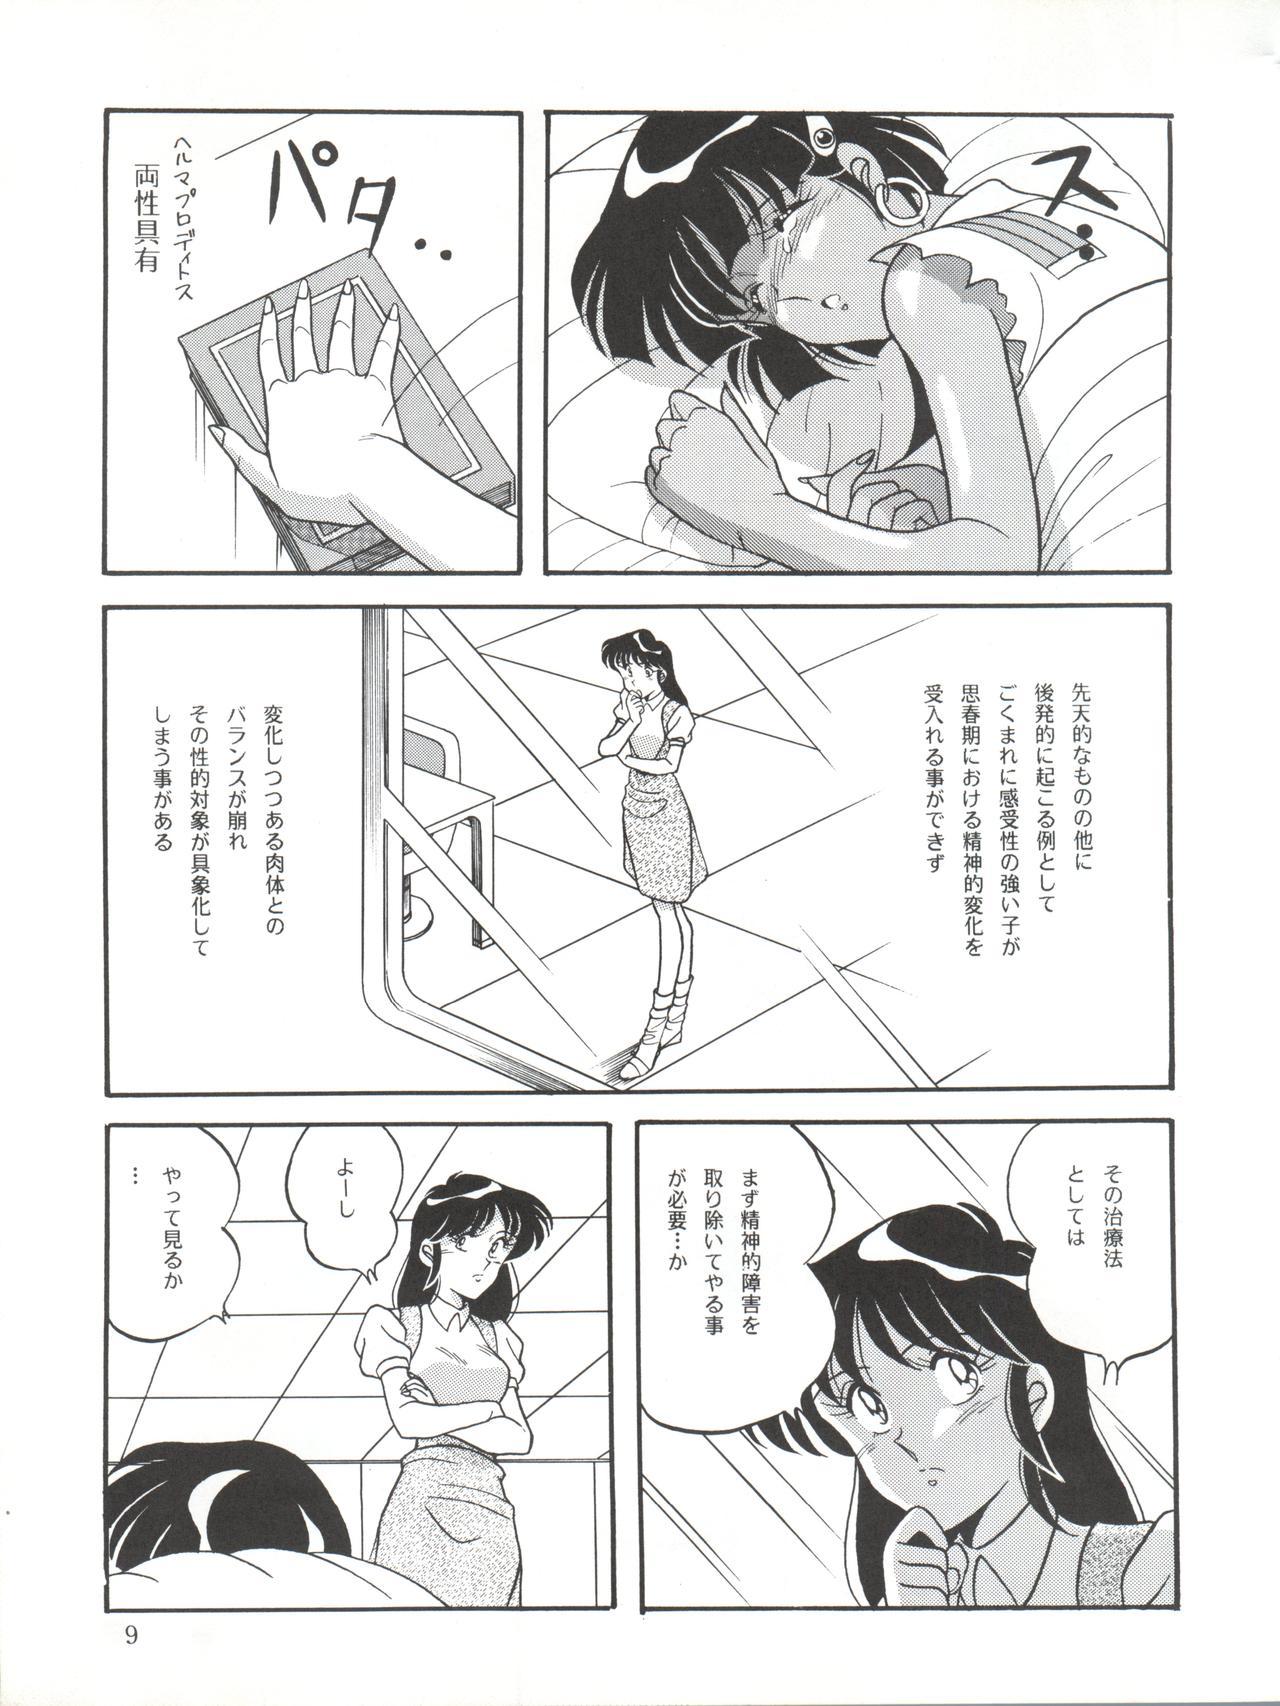 Ballbusting Vocalization 2 - Fushigi no umi no nadia Big Penis - Page 9